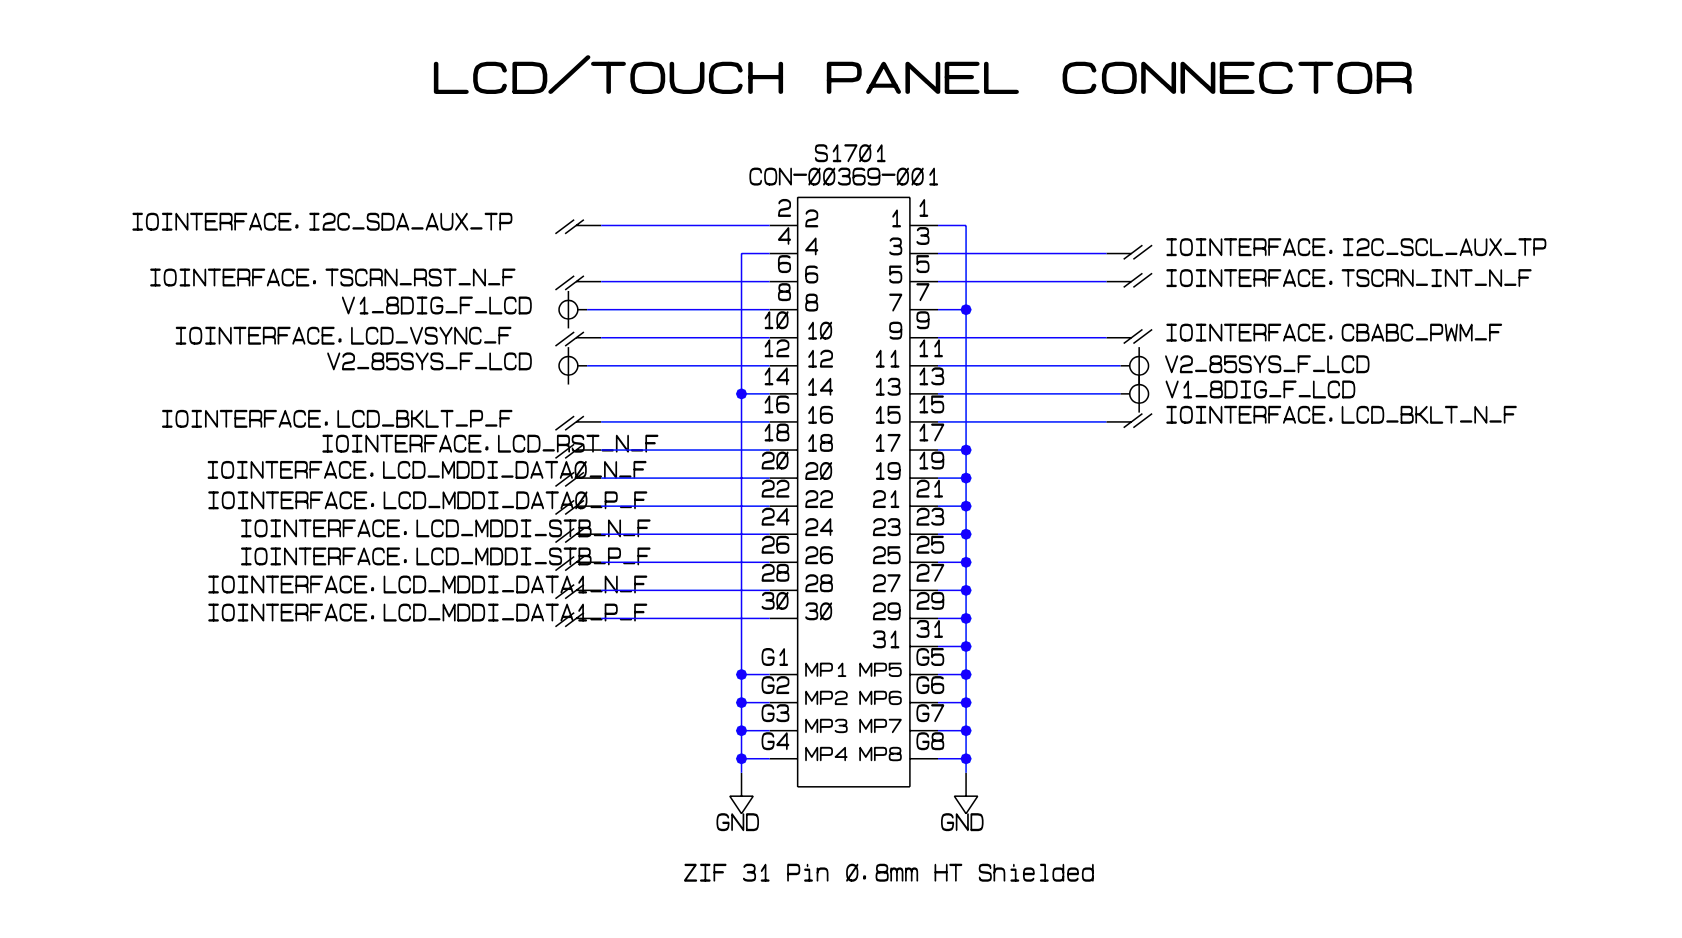 Module connector PINs